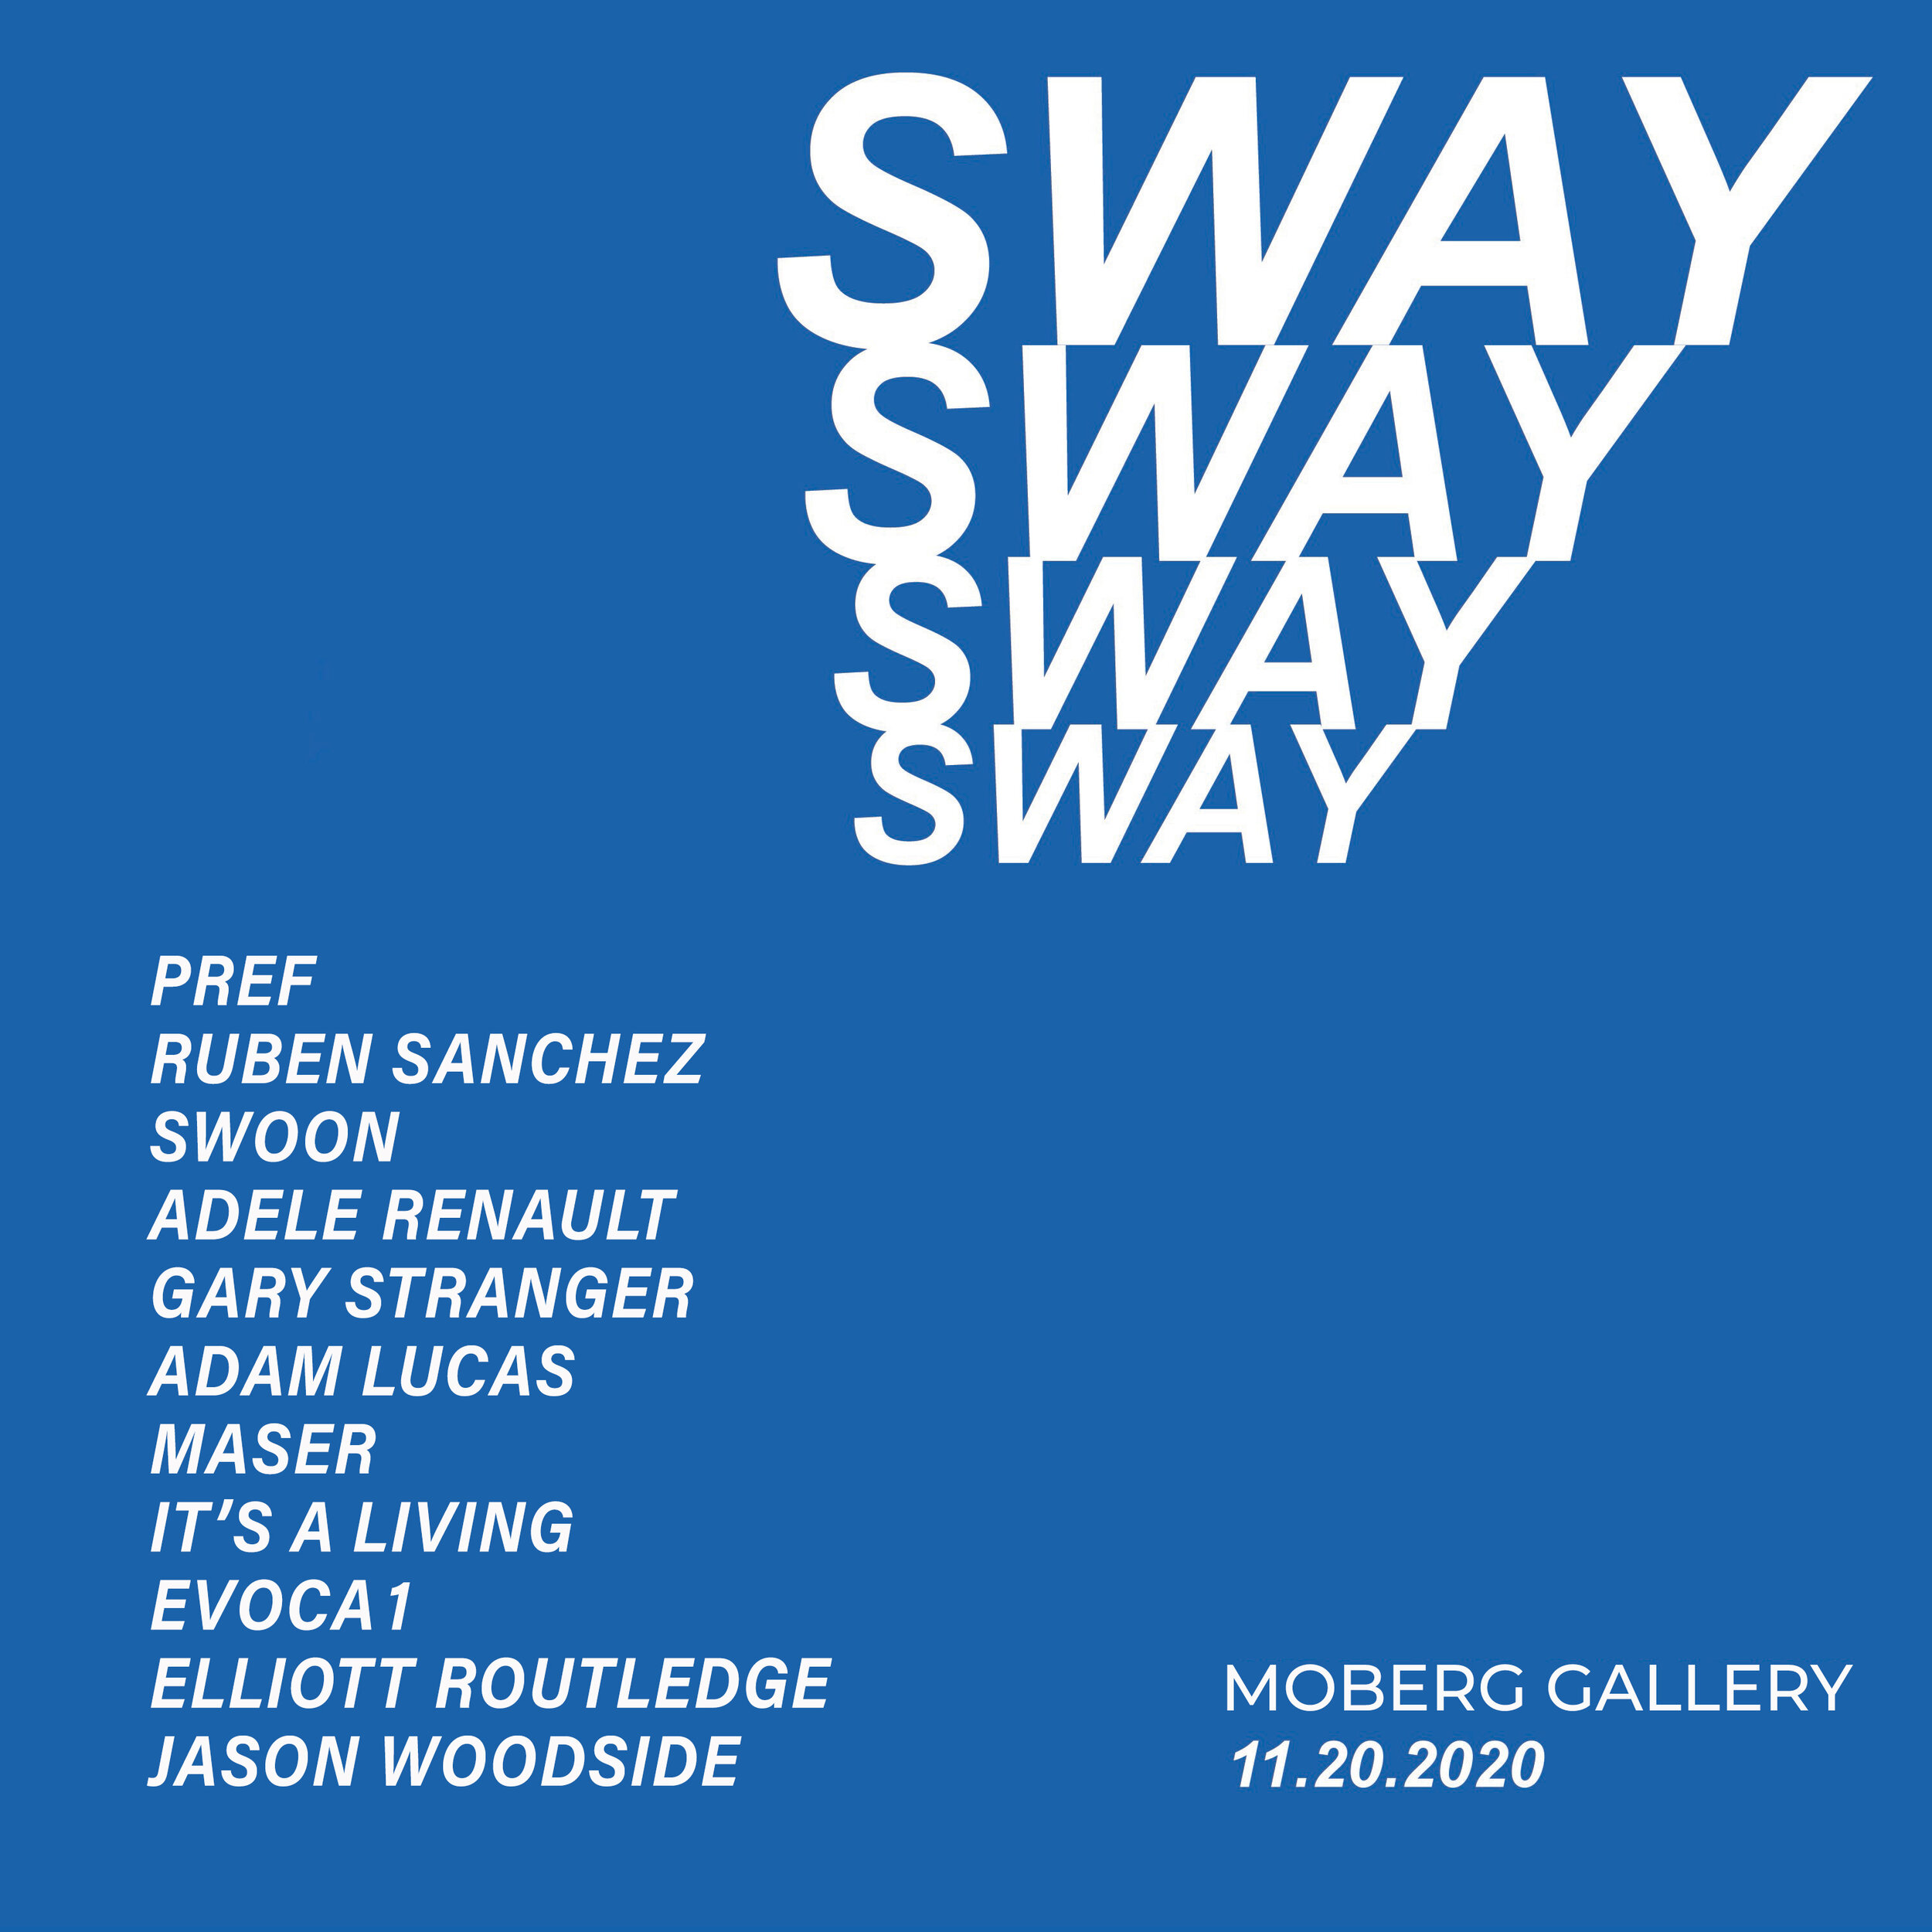 Sway-Moberg-Gallery-Jason-Woodside-Flyer.jpg